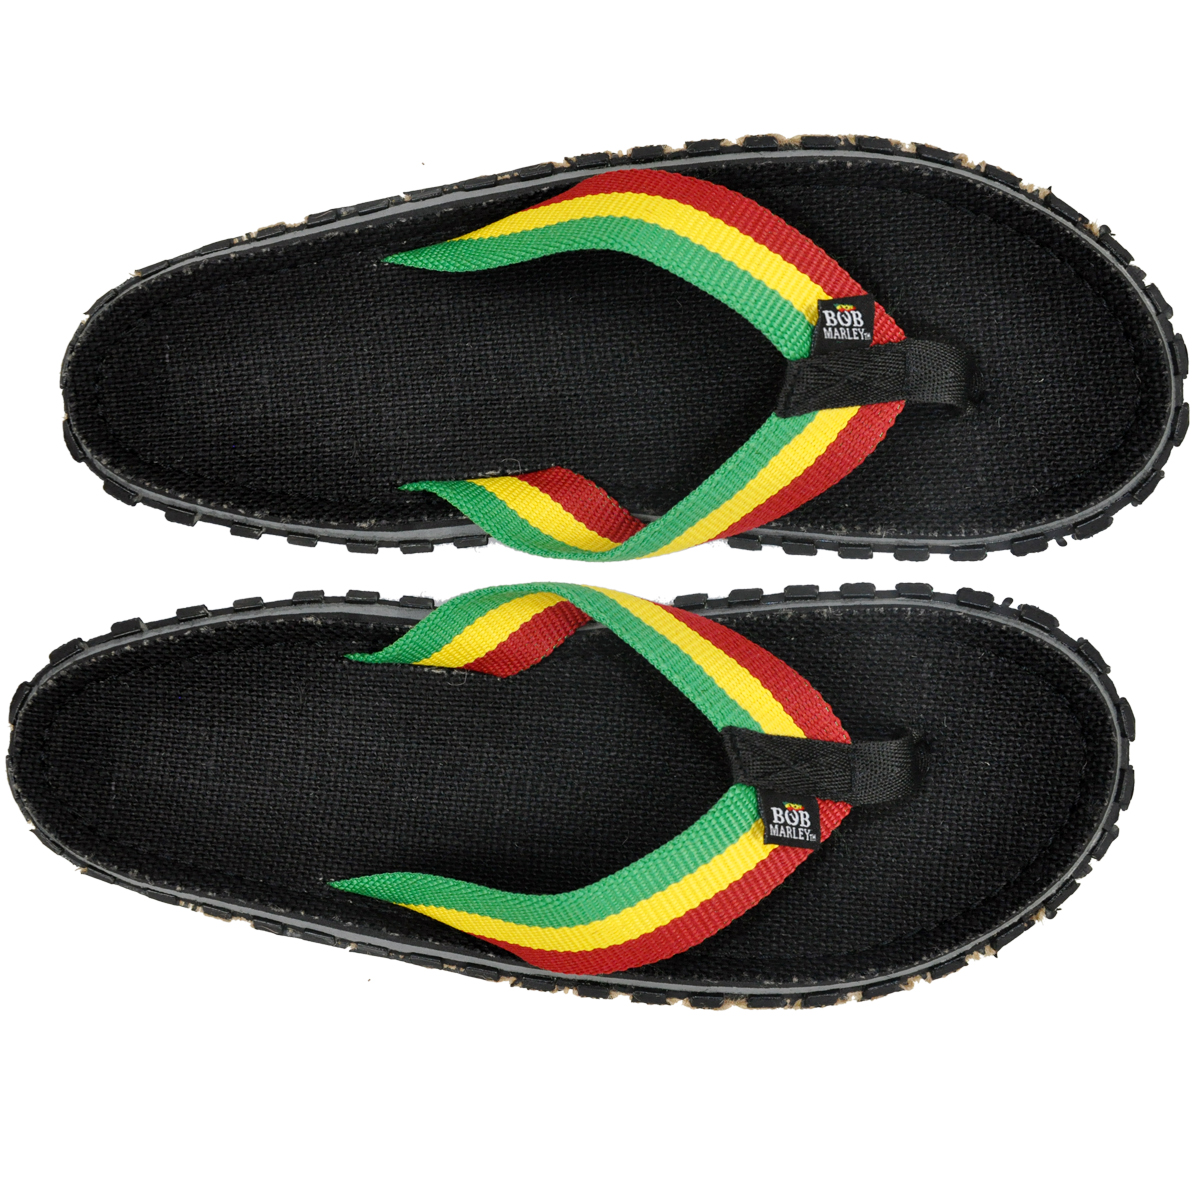 reggae shoes